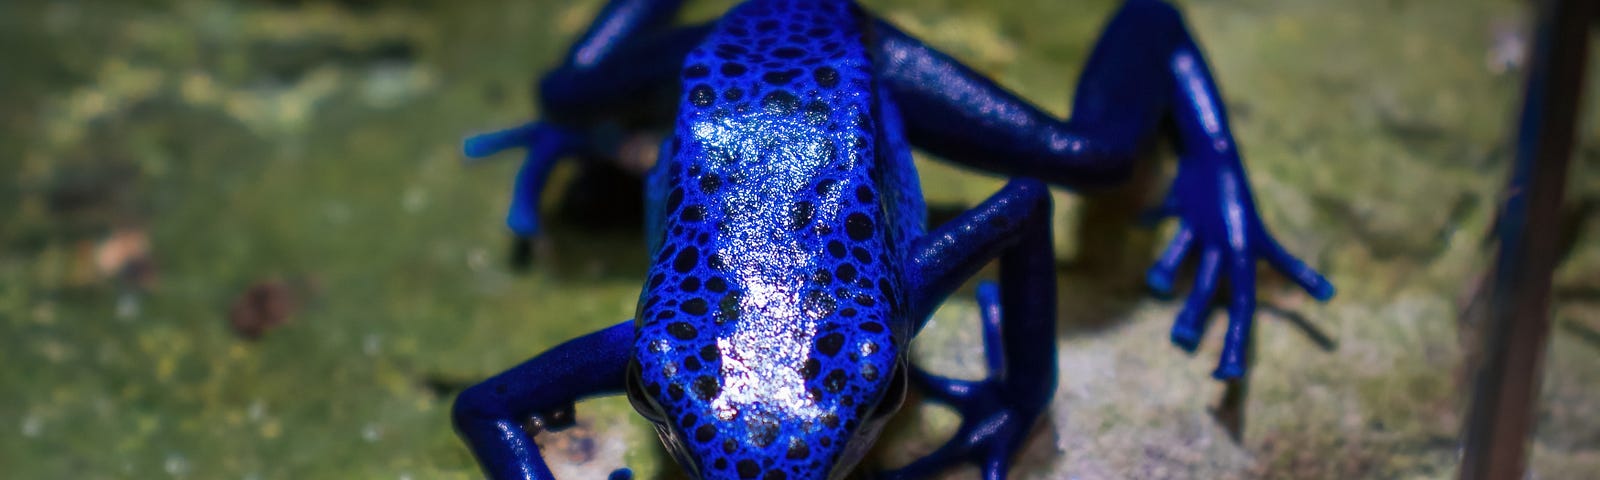 A blue frog on a leaf